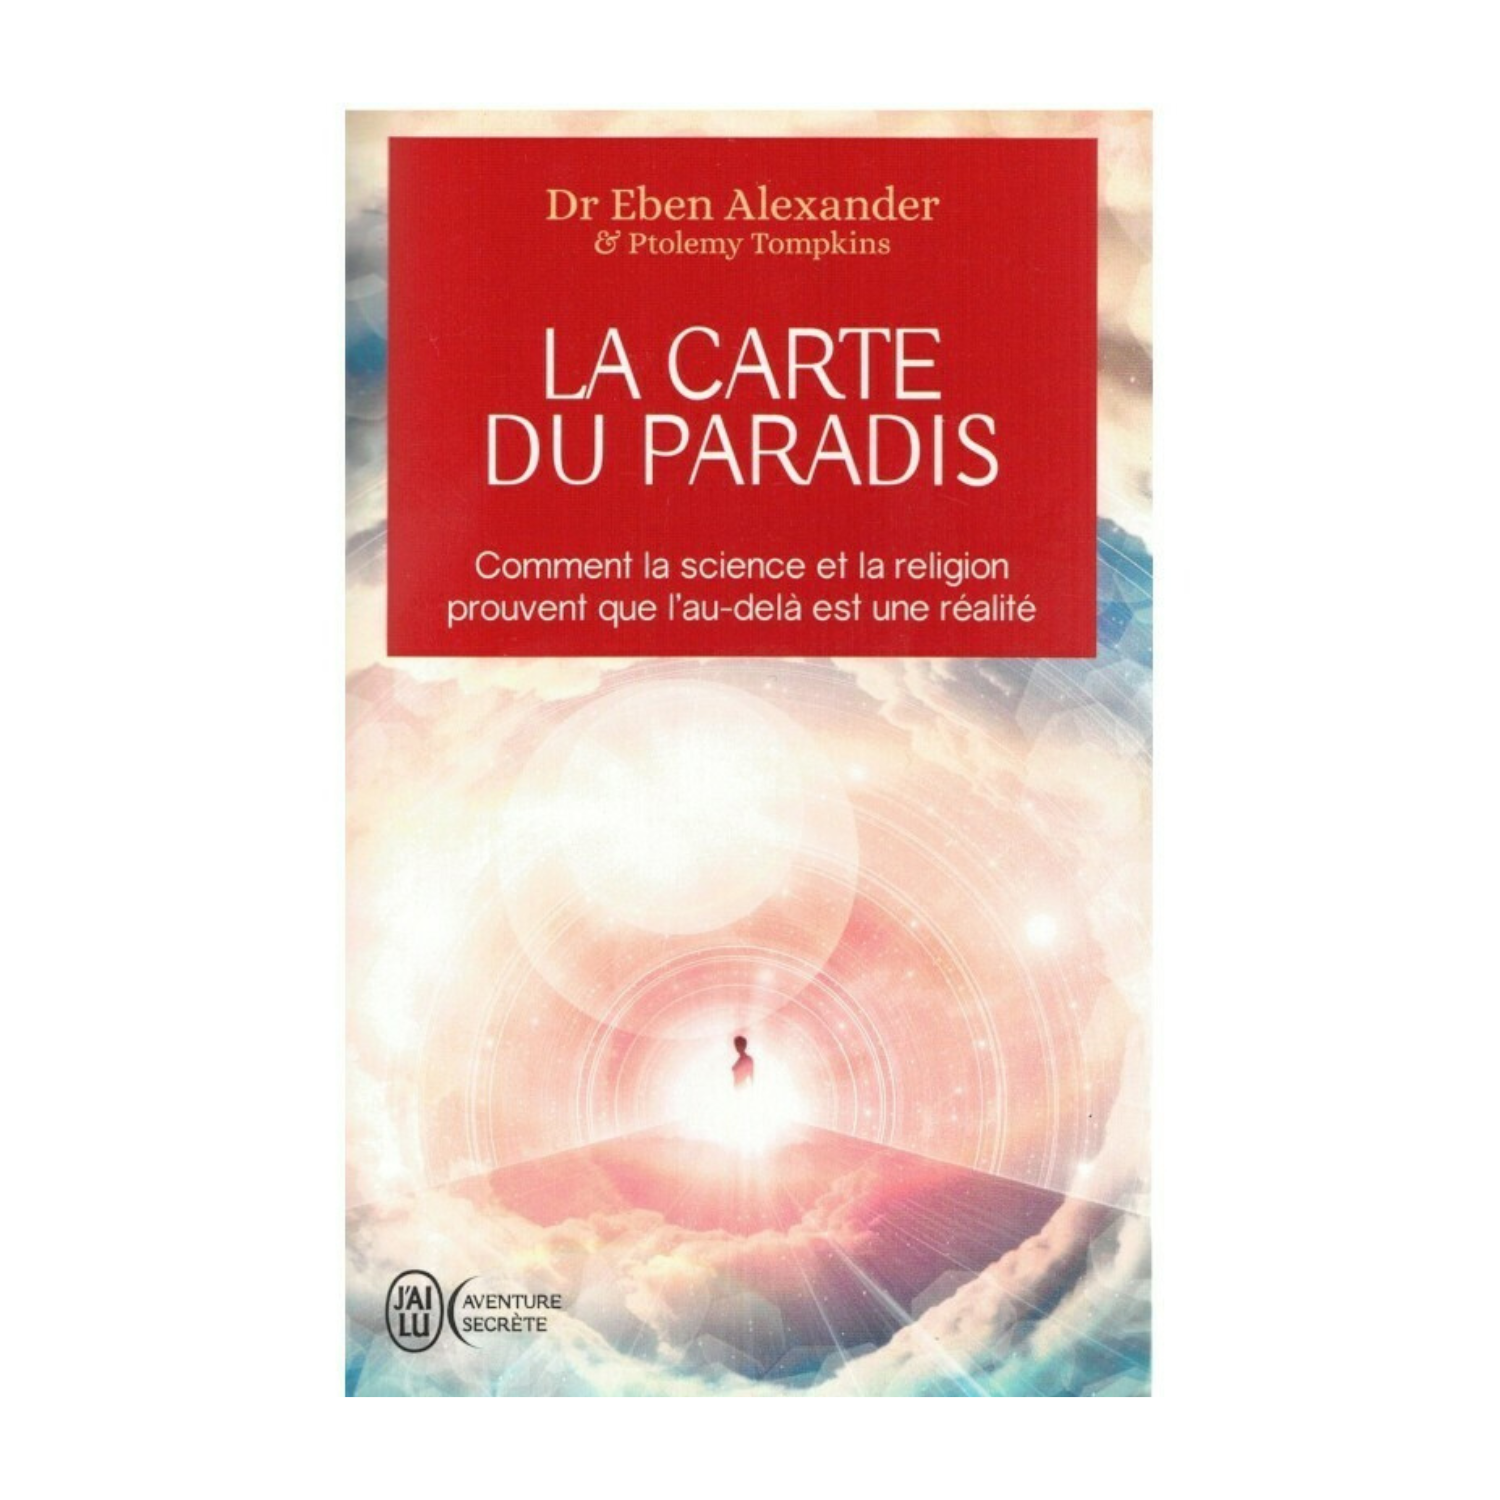 La carte du paradis - Eben Alexander & Ptolemy Tompkins